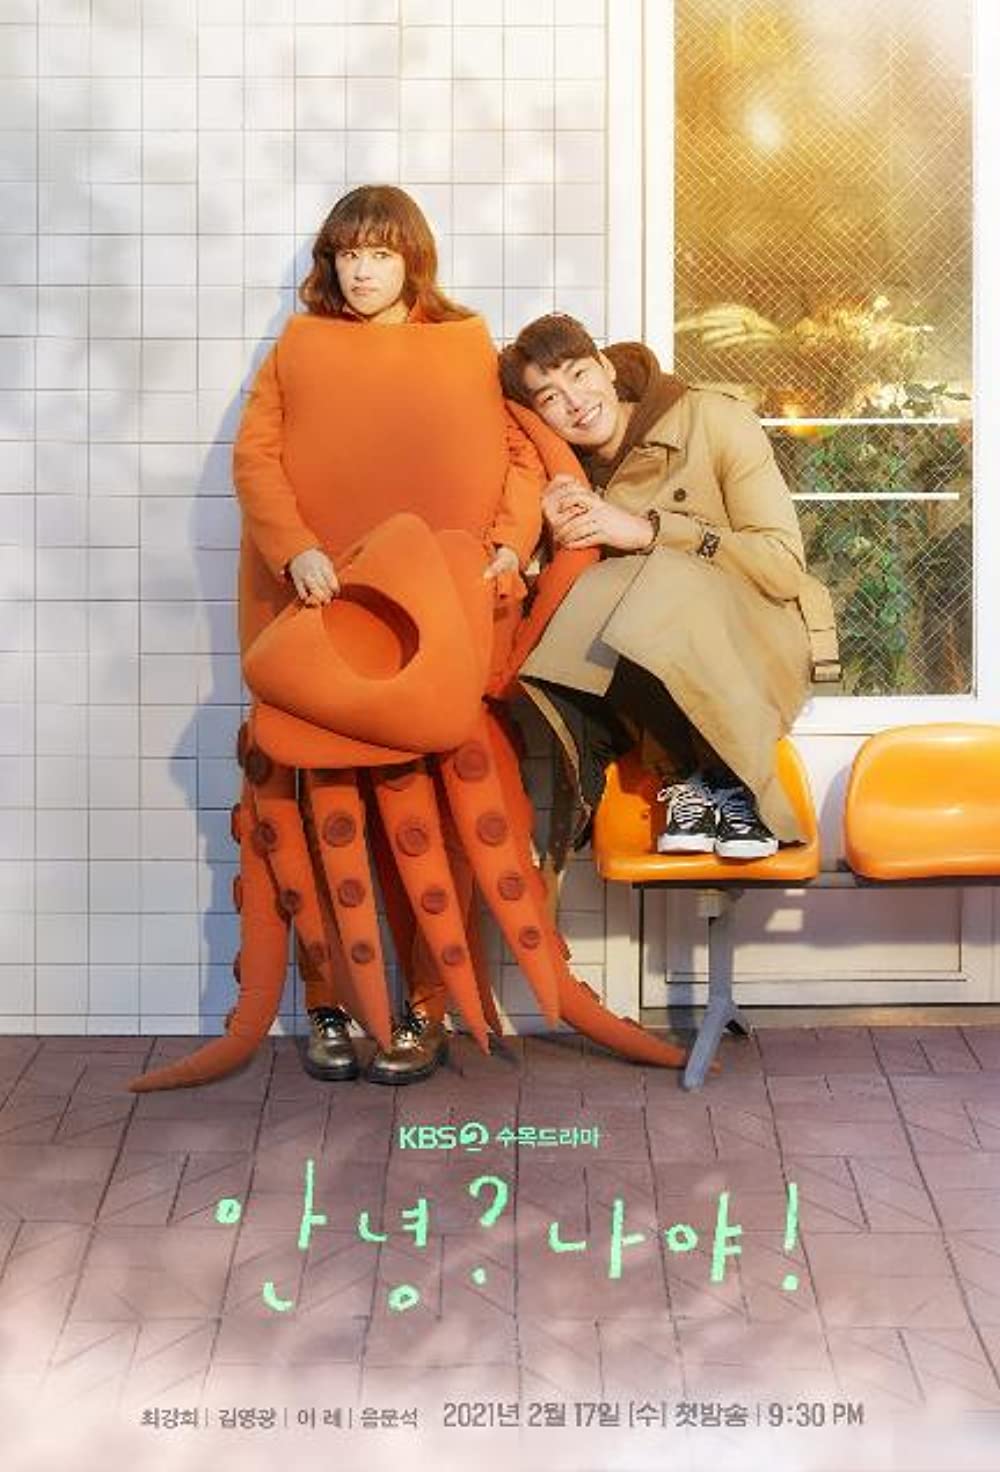 11 Rekomendasi drama Korea romantis underrated, ceritanya seru abis